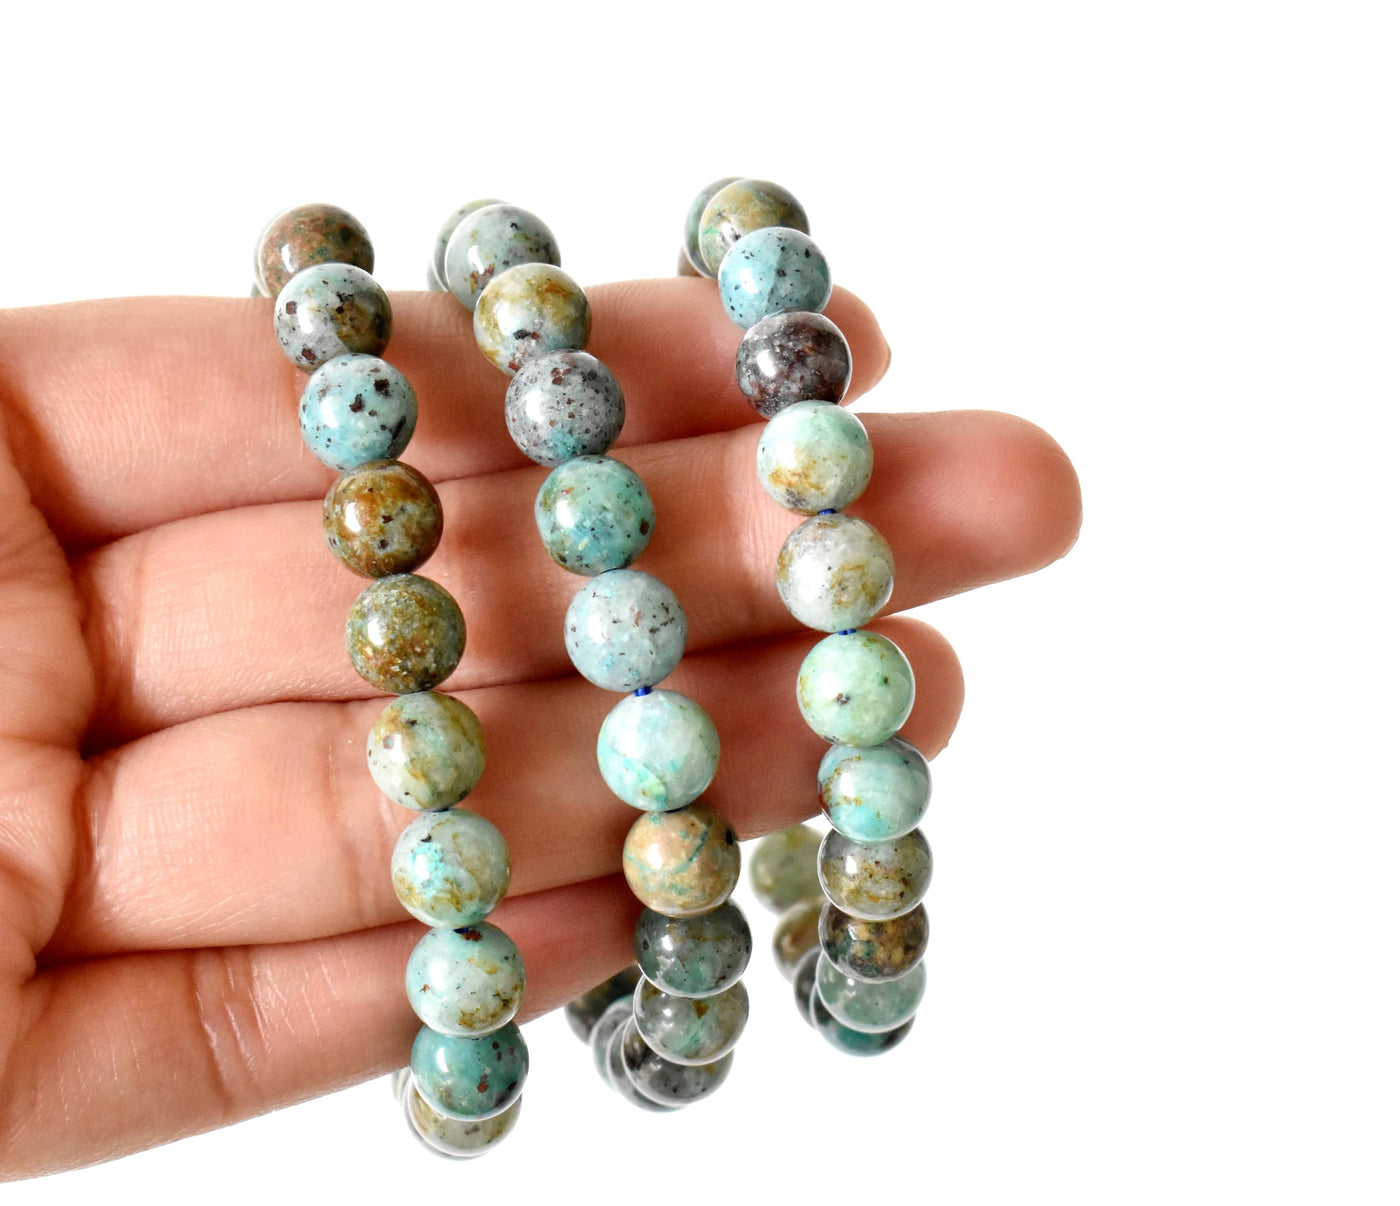 Chrysocolla Stone Beads Bracelet (Clarity and Harmony)